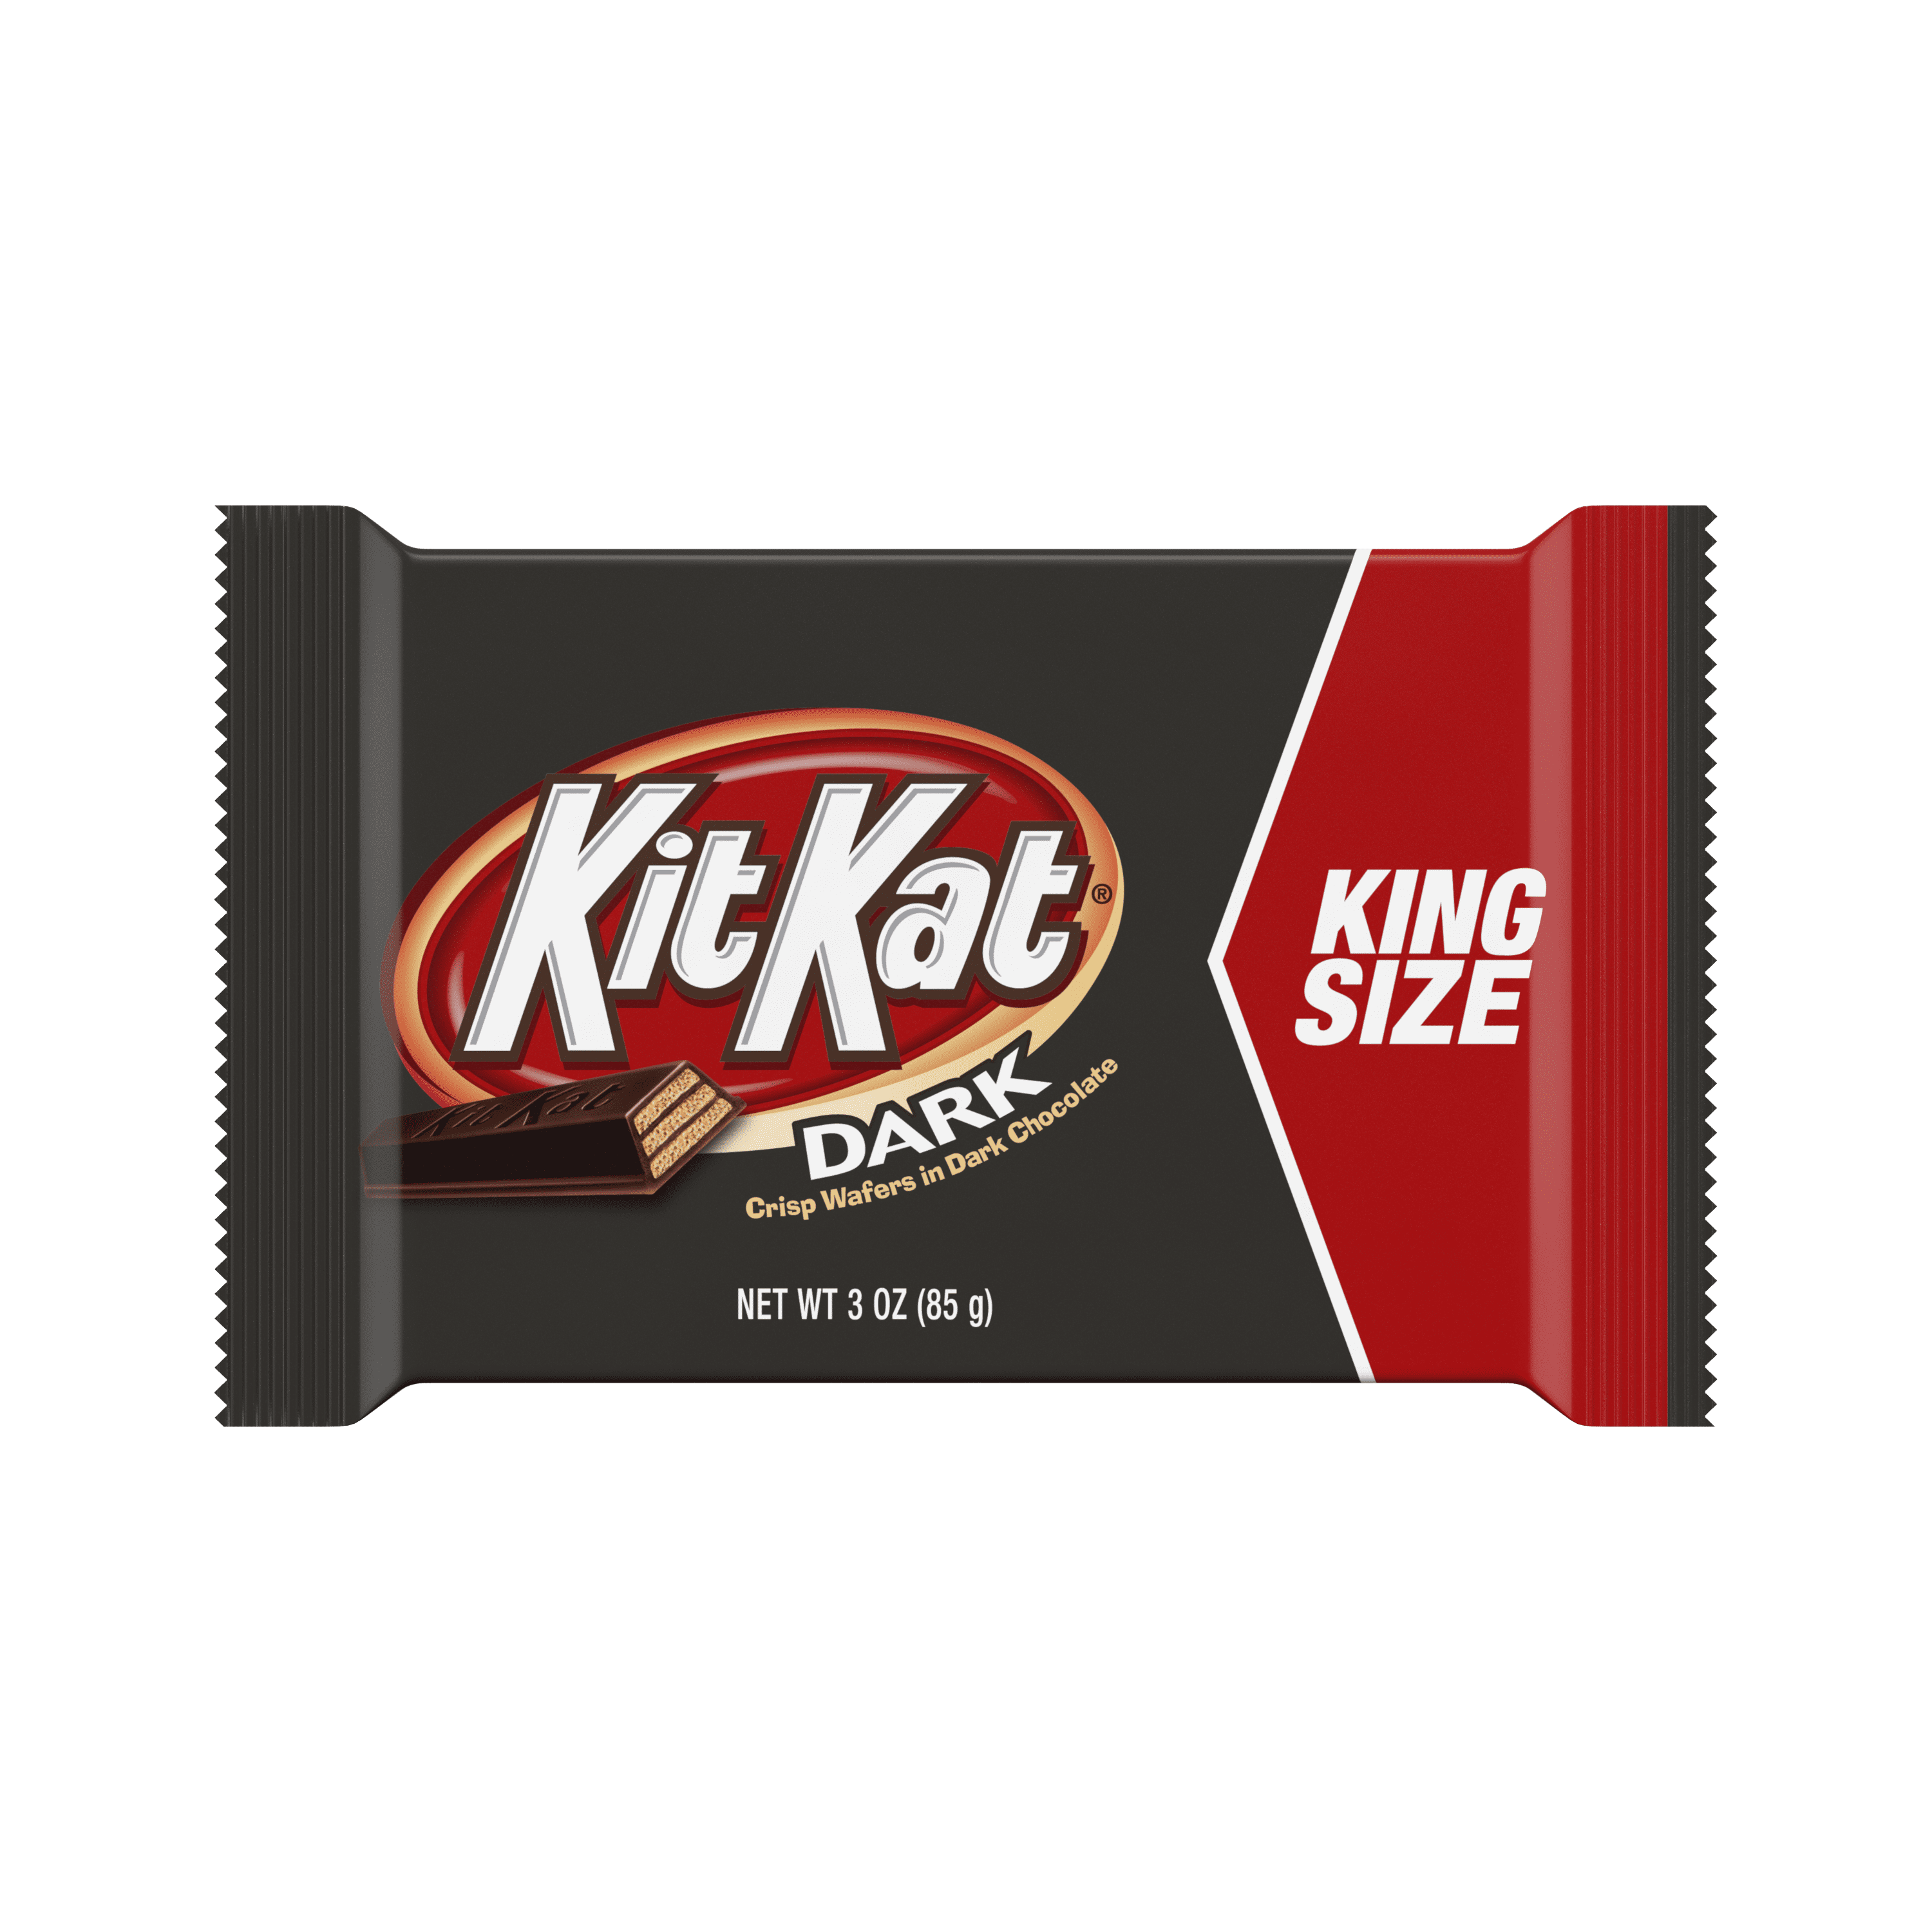 May 2021 New York Kit Kat Wafer Bar Coated Dark – Stock Editorial